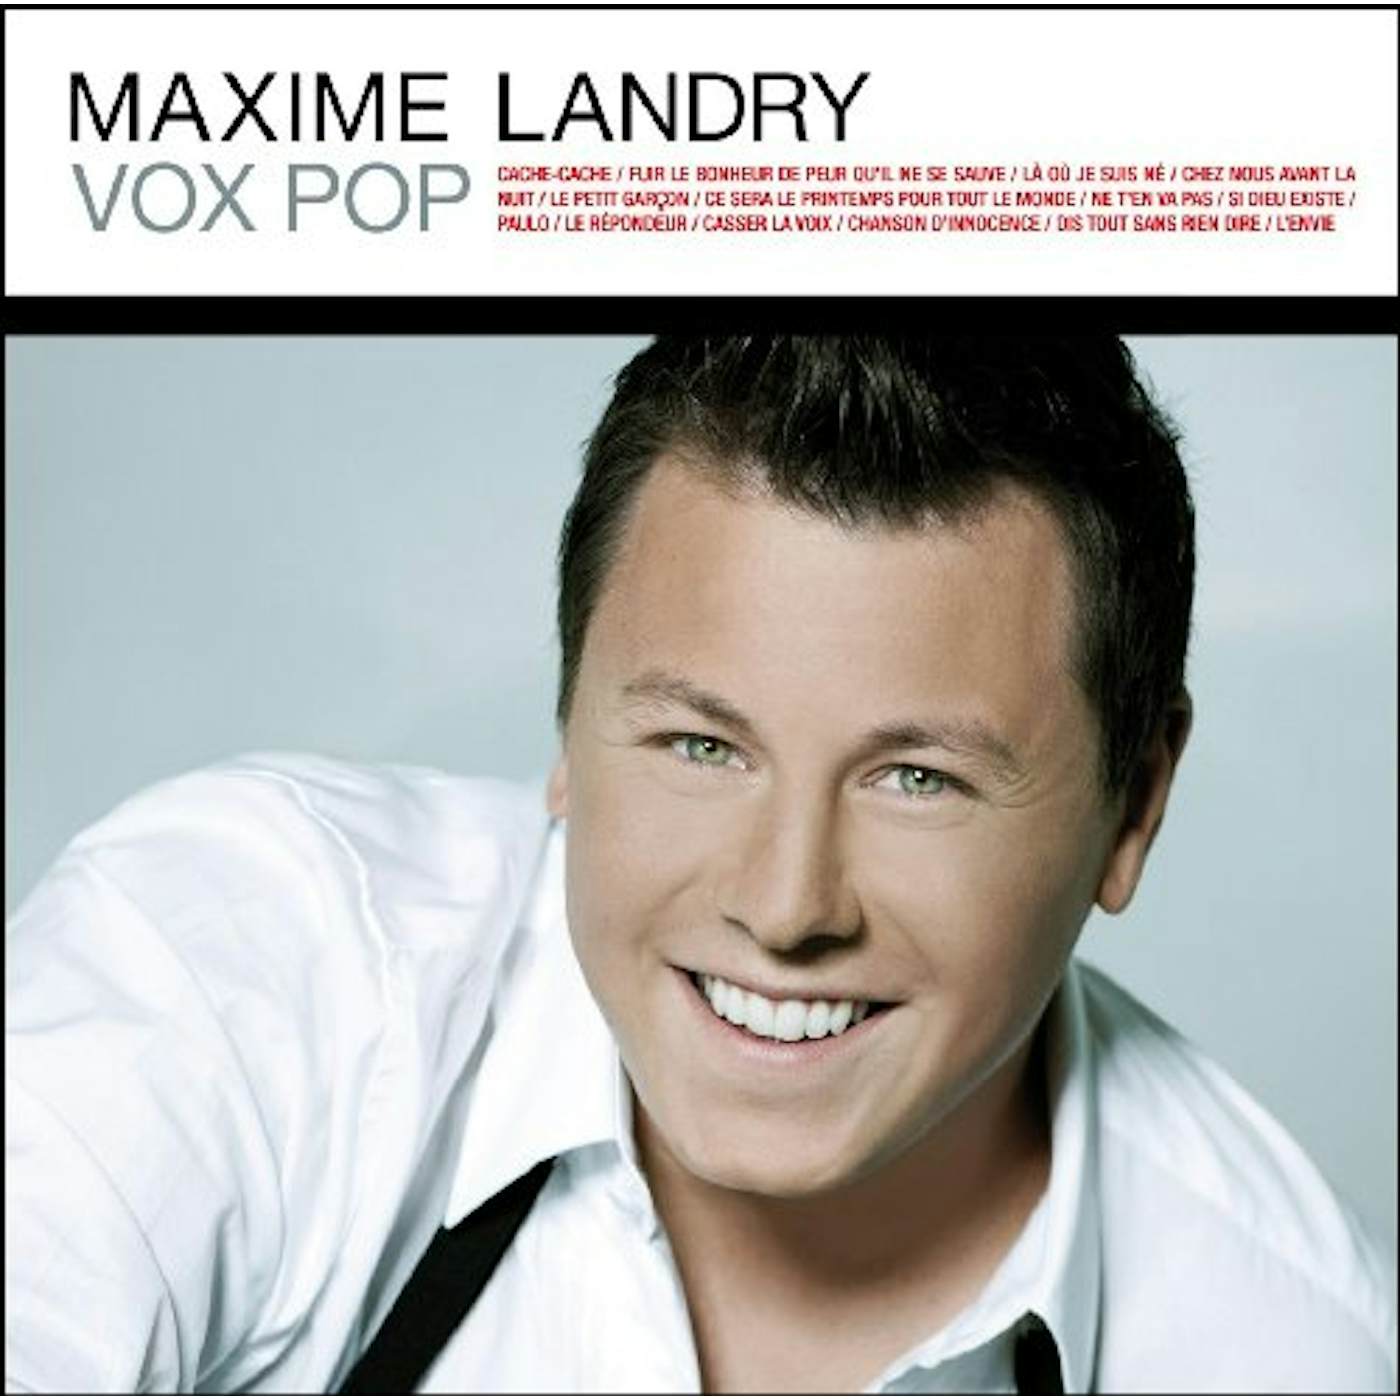 Maxime Landry VOX POP CD